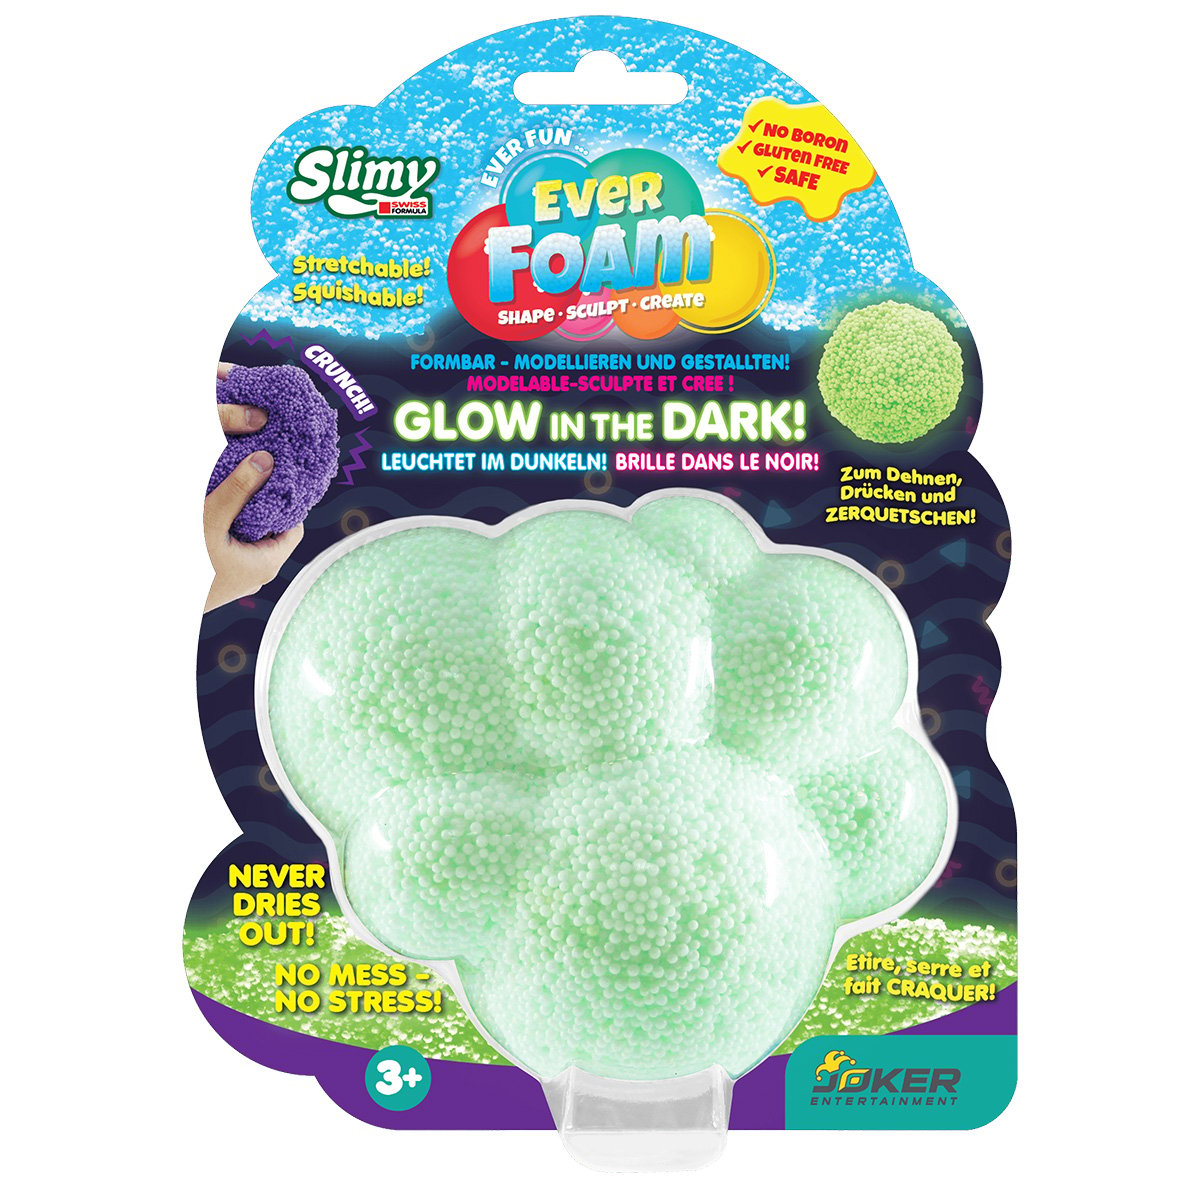 Poze Slime Ever Foam, Slimy, Glow in the Dark